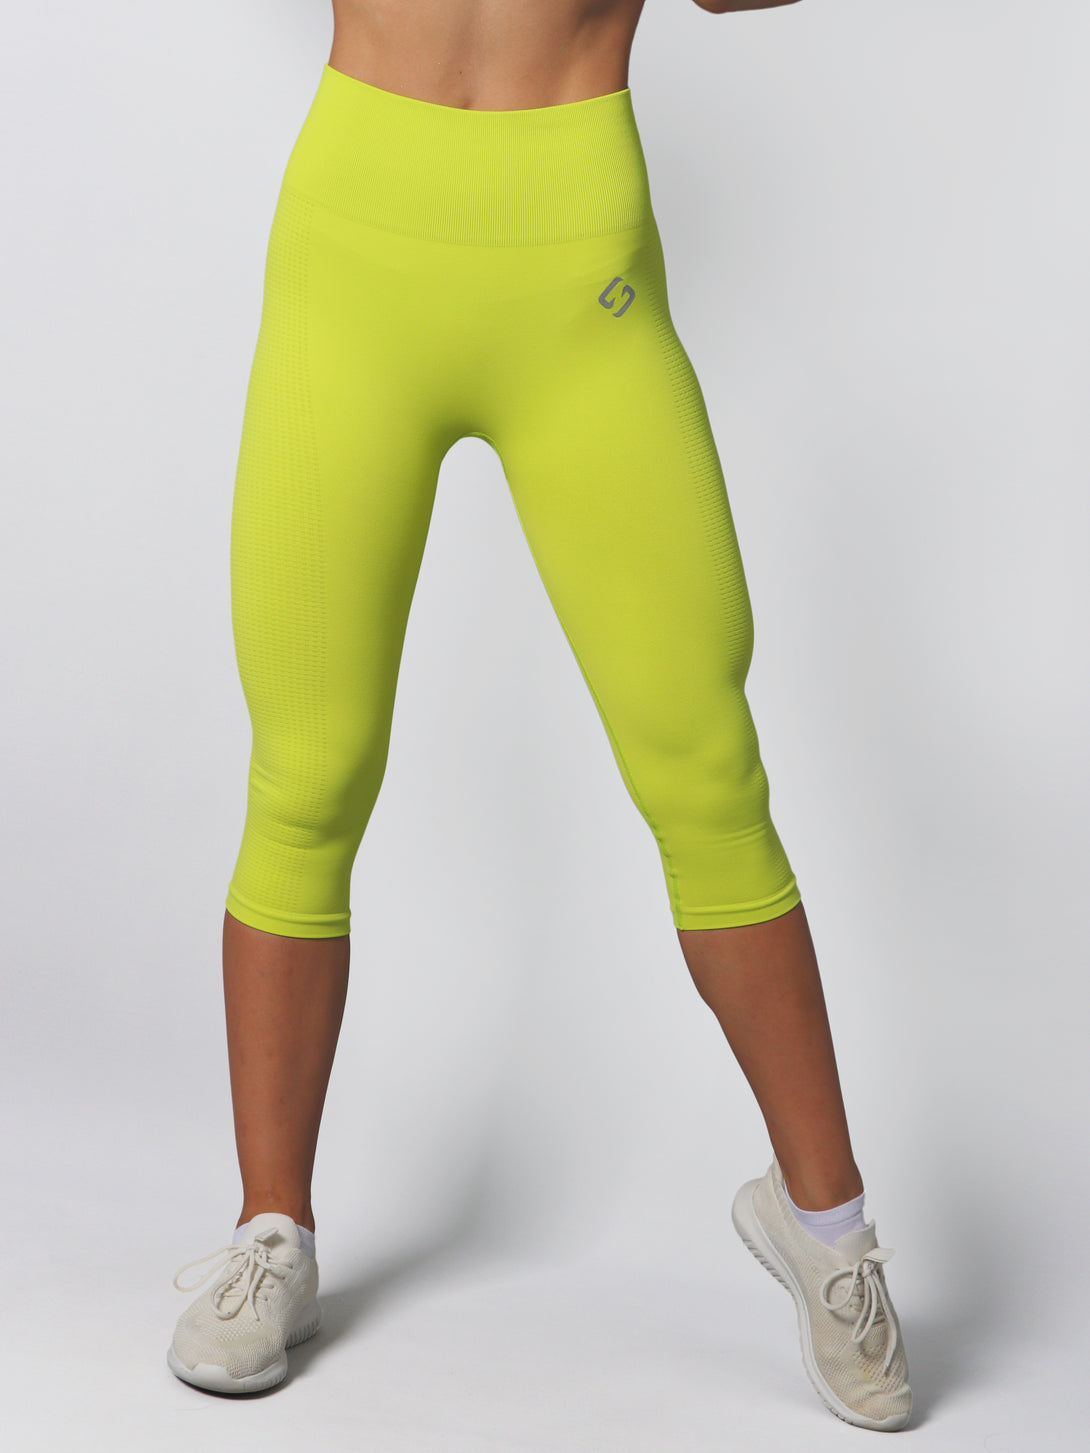 A Woman Wearing Lime Color Seamless Capri Legging